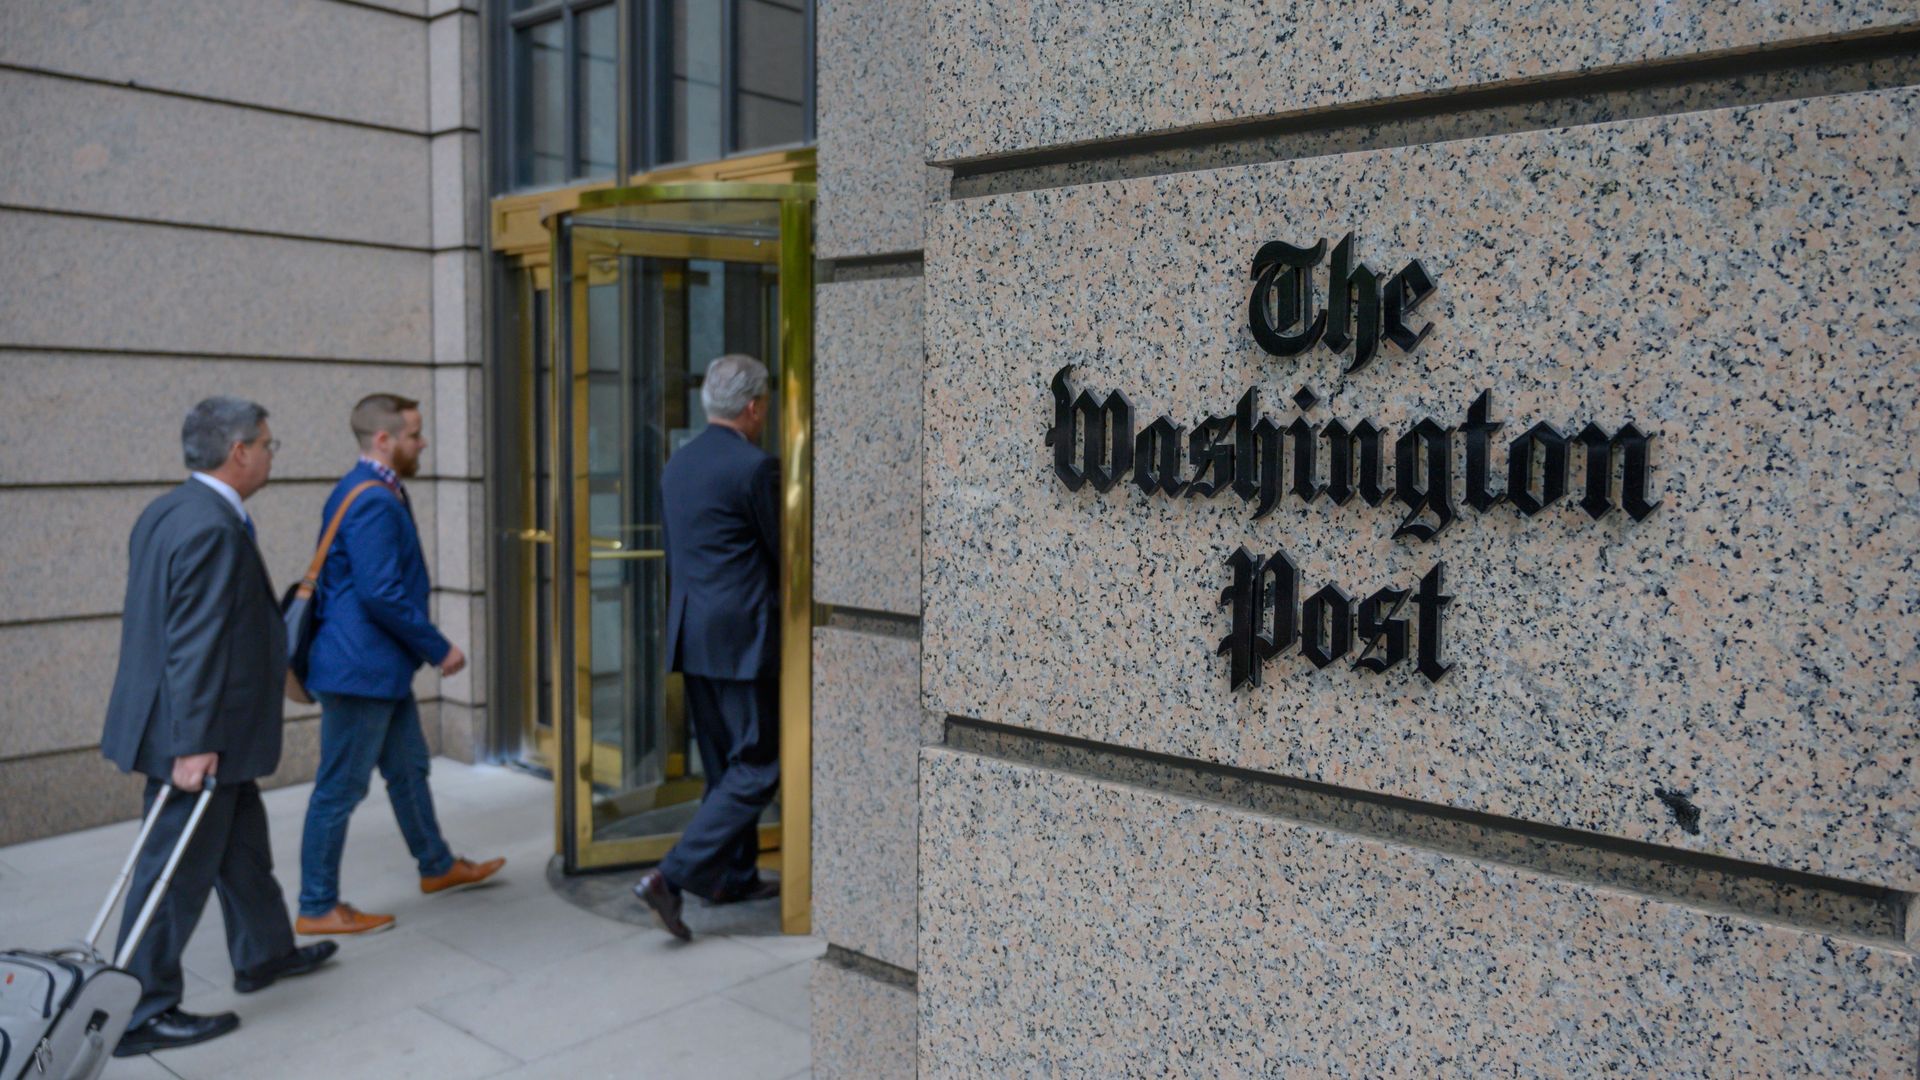 The Washington Post building exterior